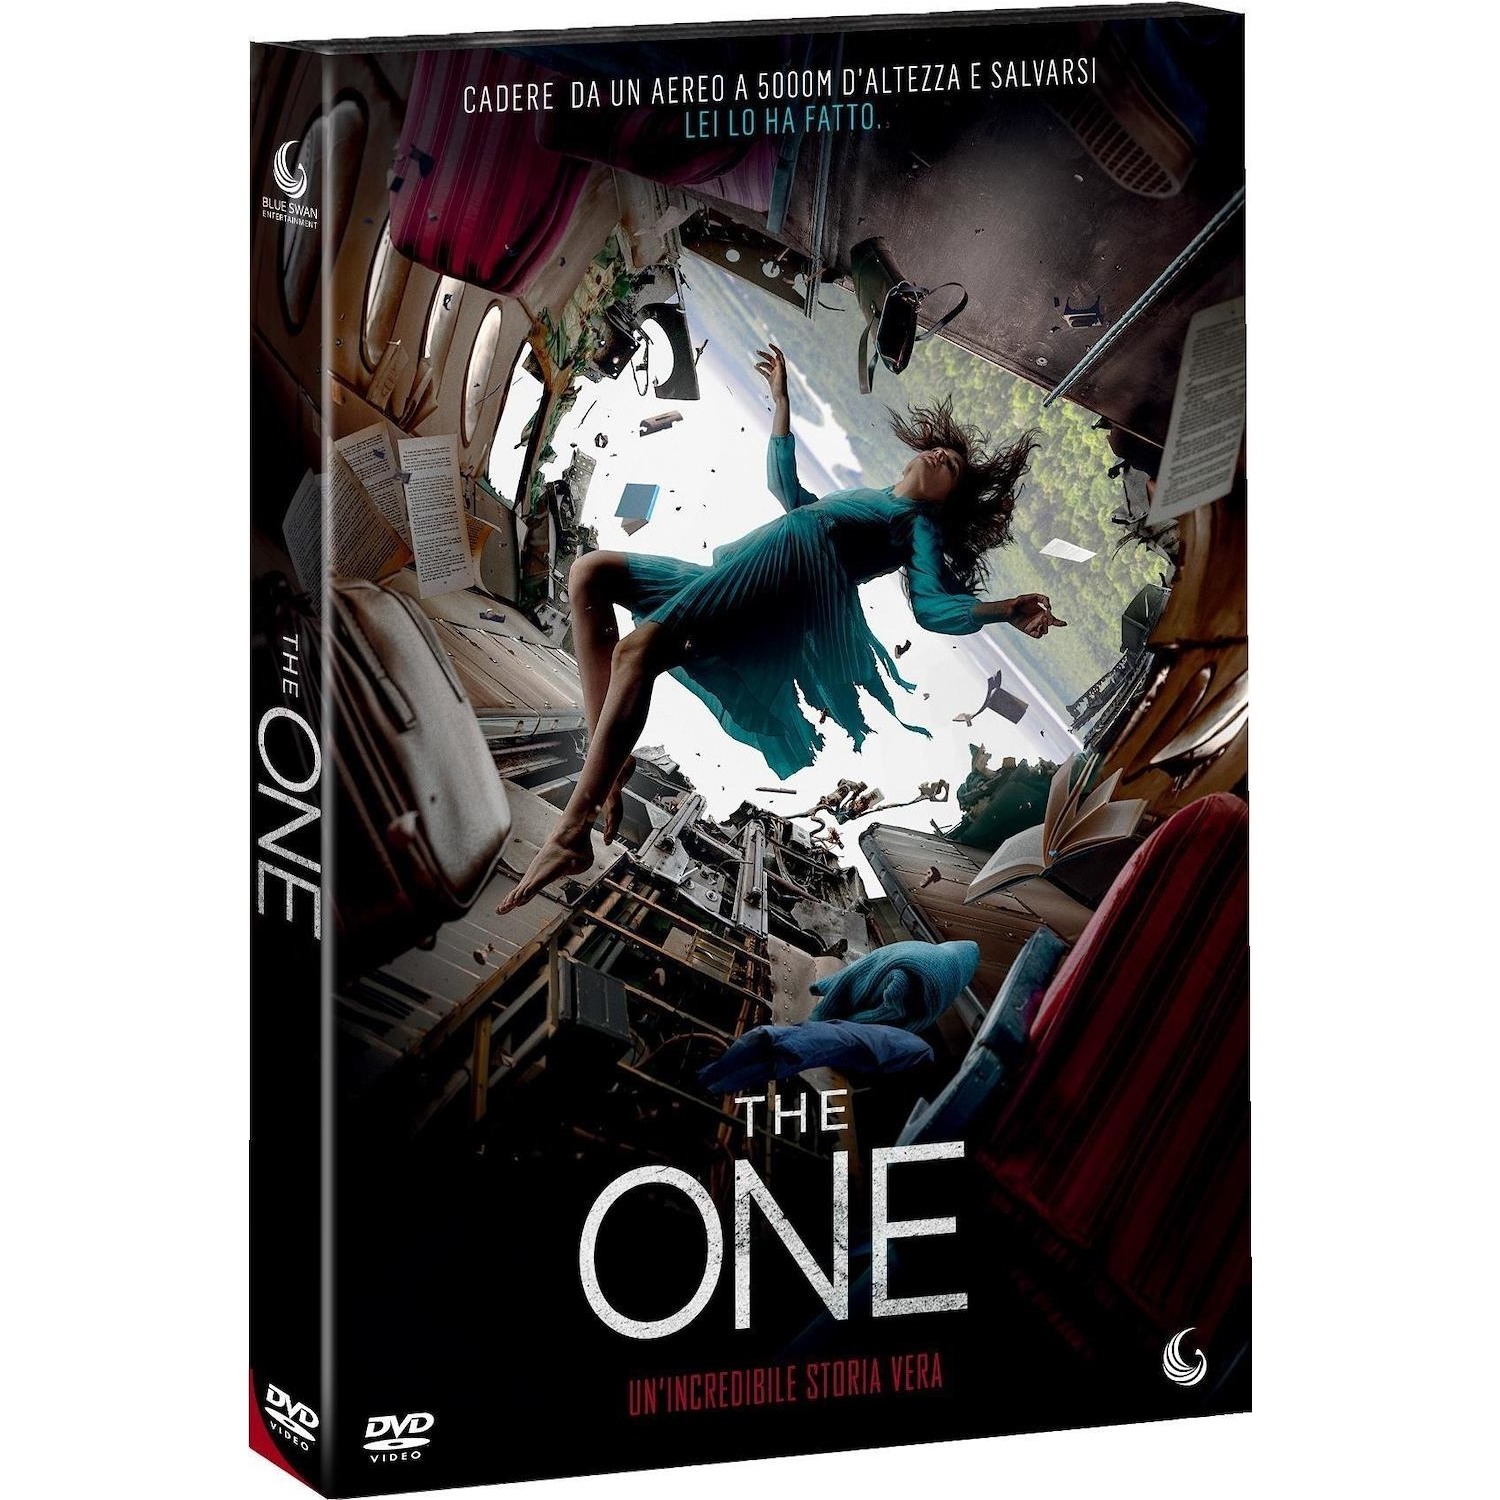 Immagine per DVD The One da DIMOStore